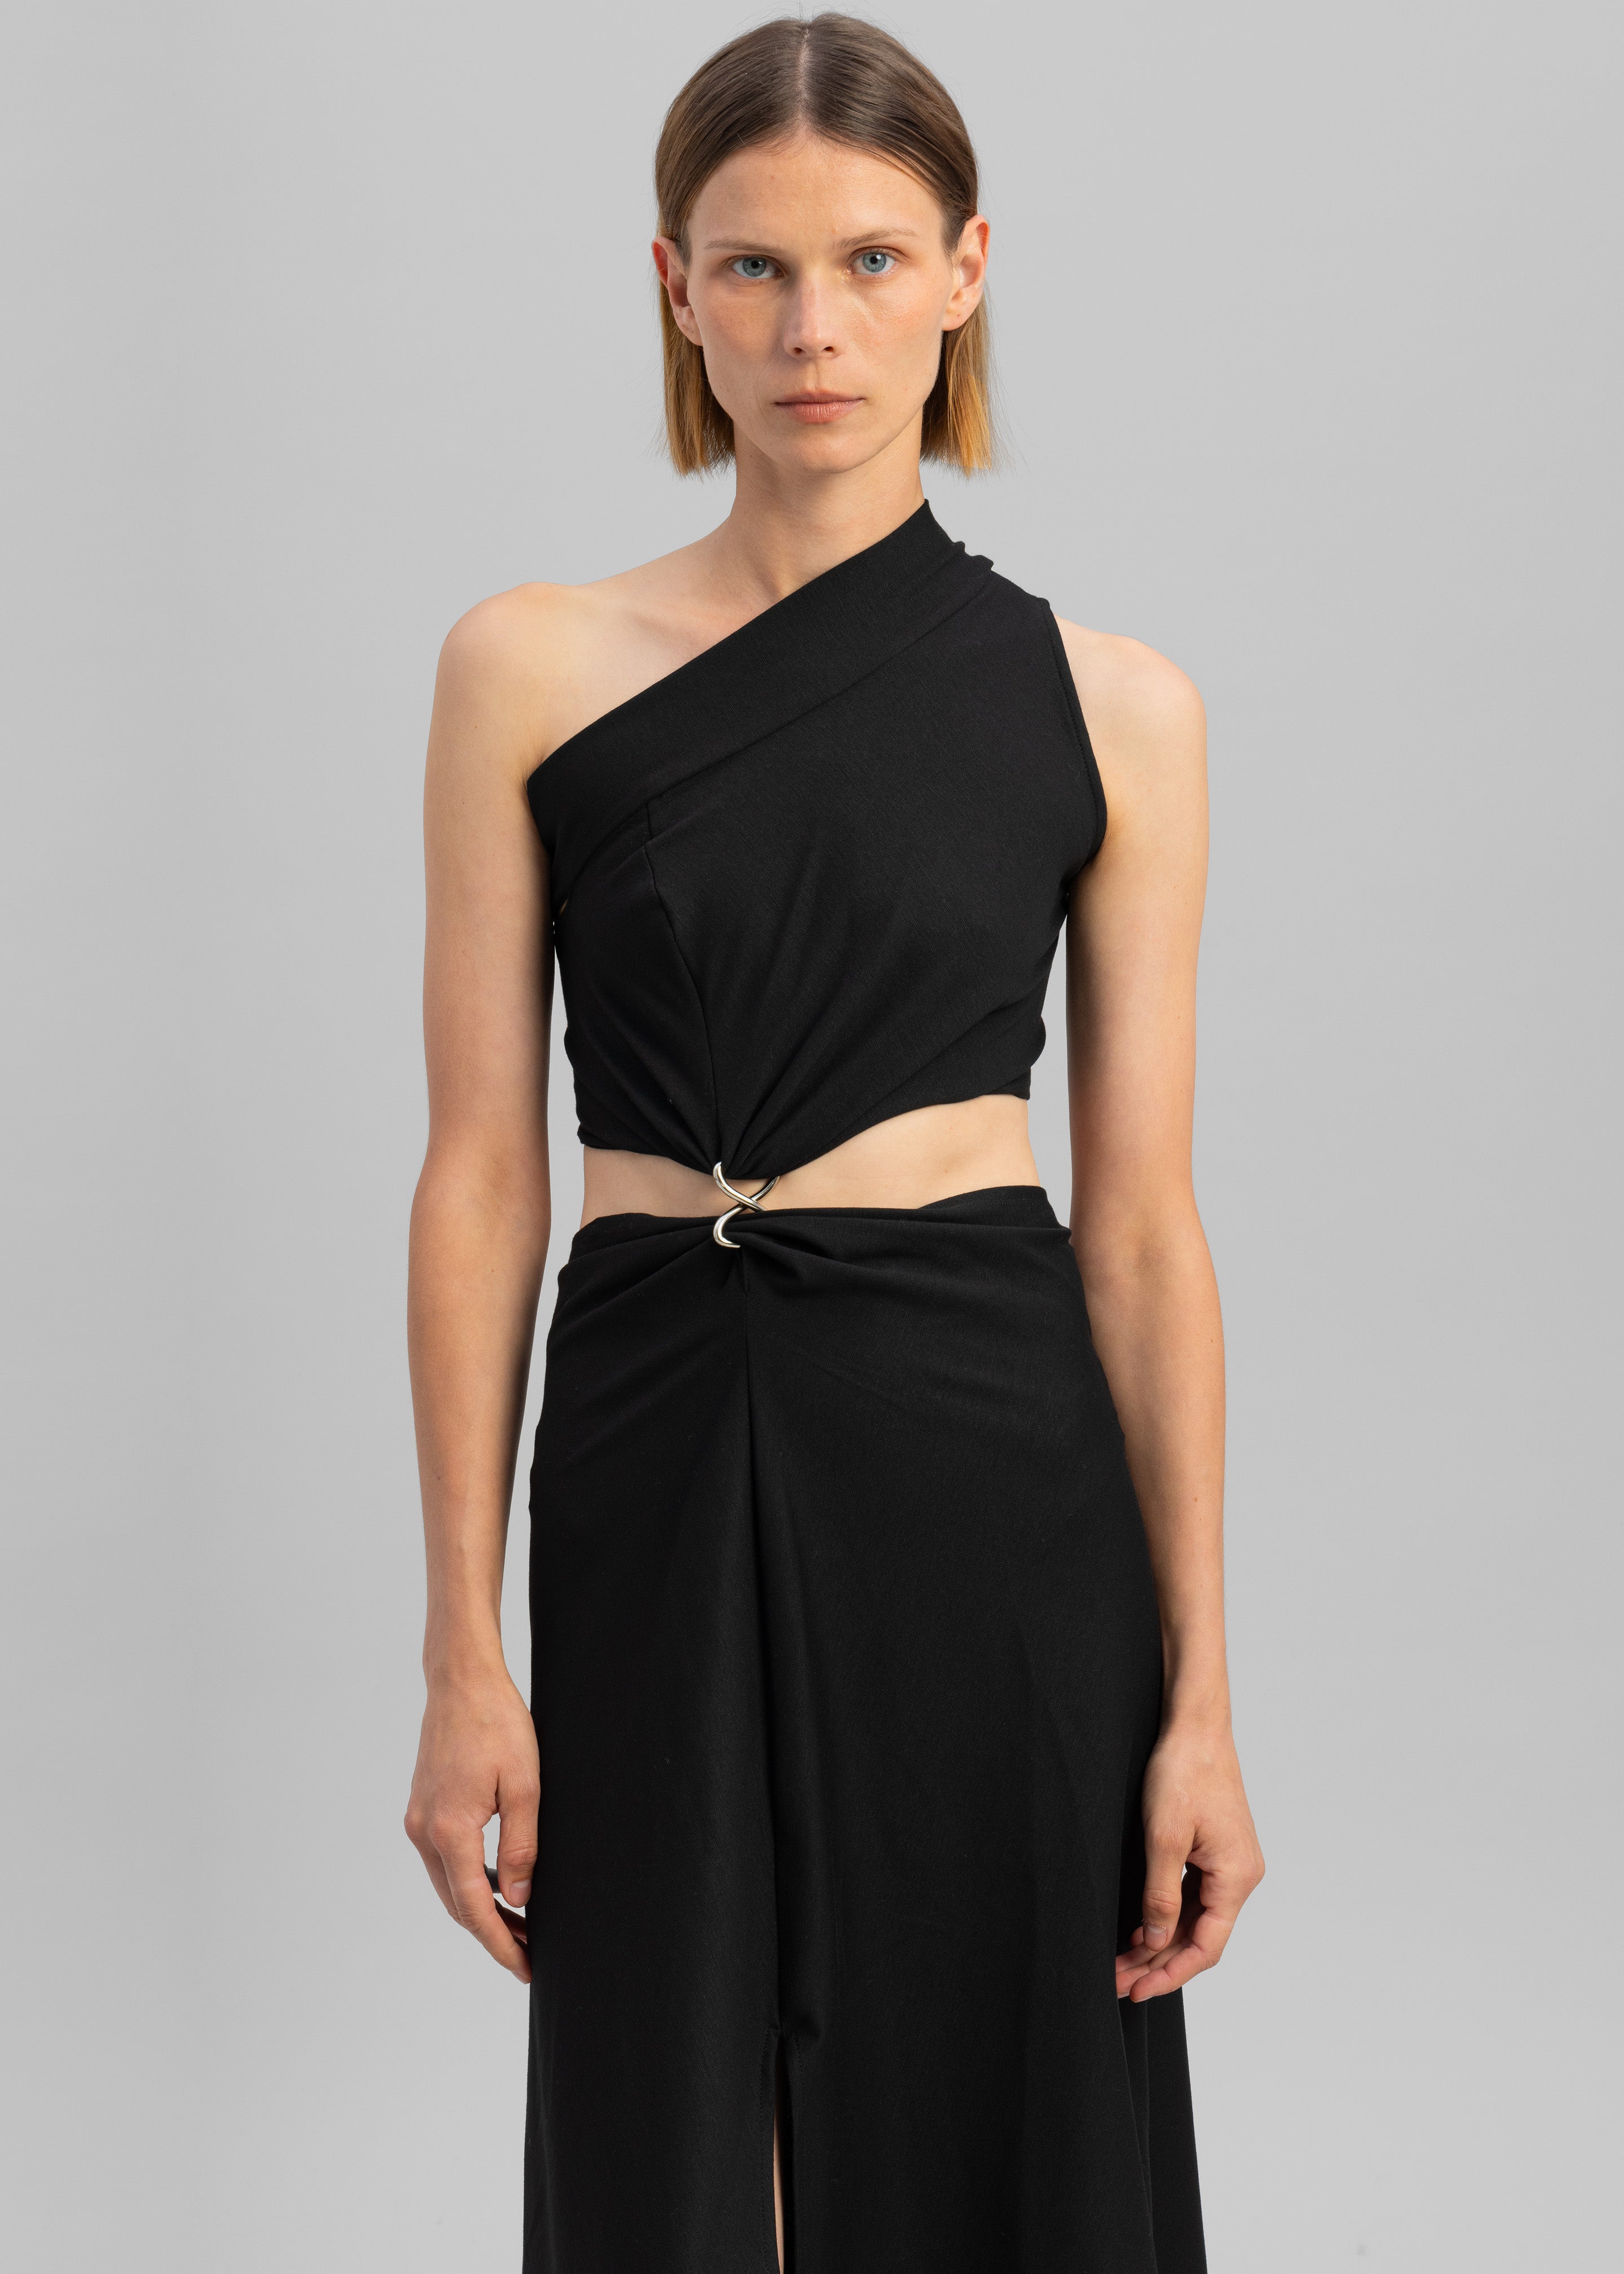 Sid Neigum Knit One-Shoulder Strap Dress W Hardware Detail - Black - 2